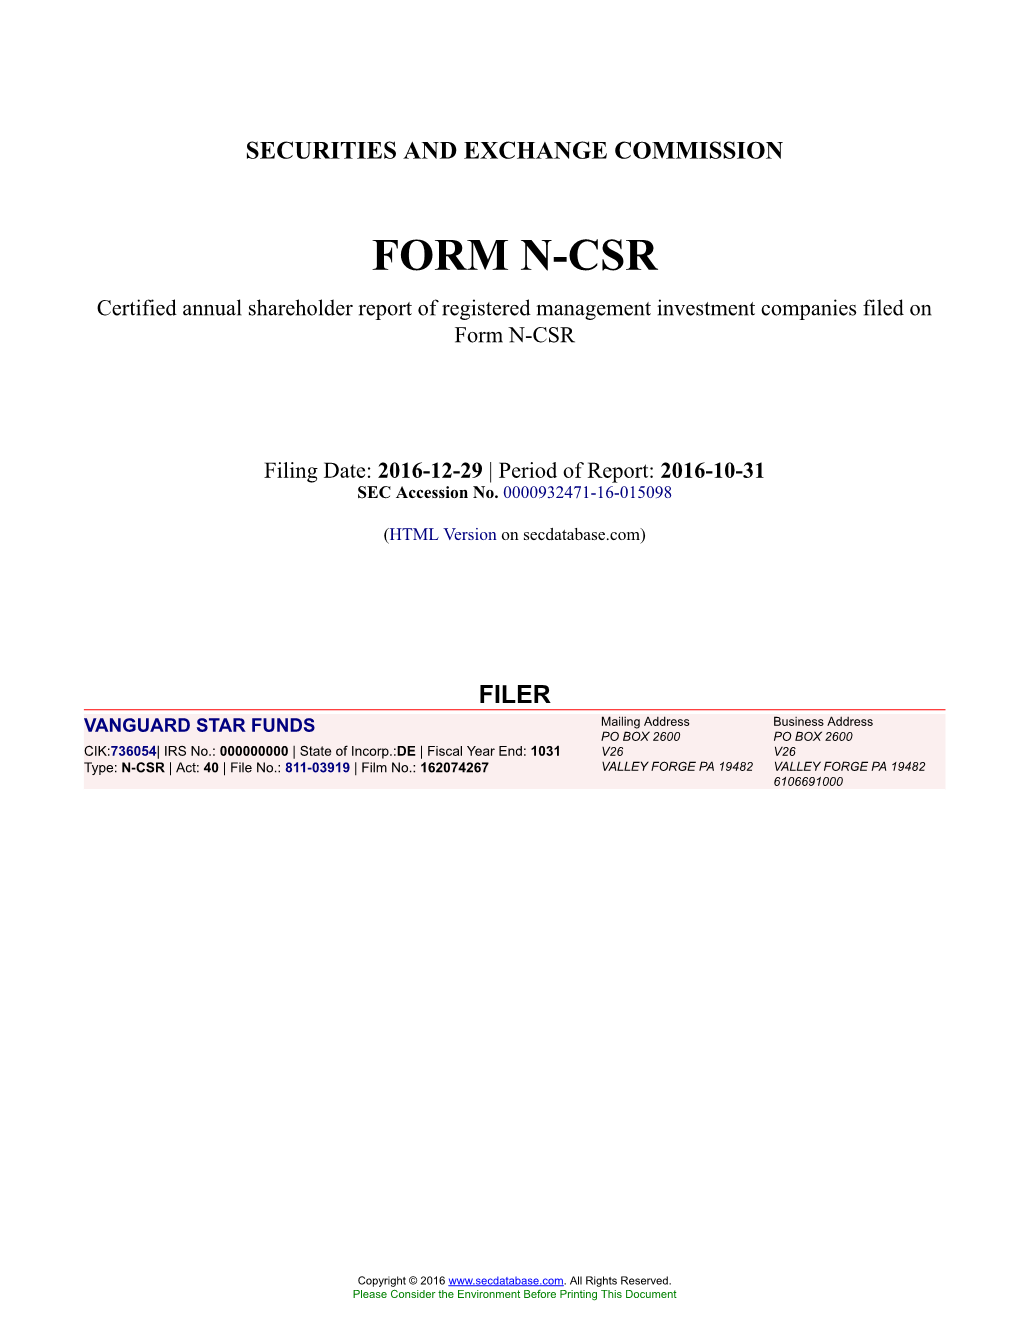 VANGUARD STAR FUNDS Form N-CSR Filed 2016-12-29